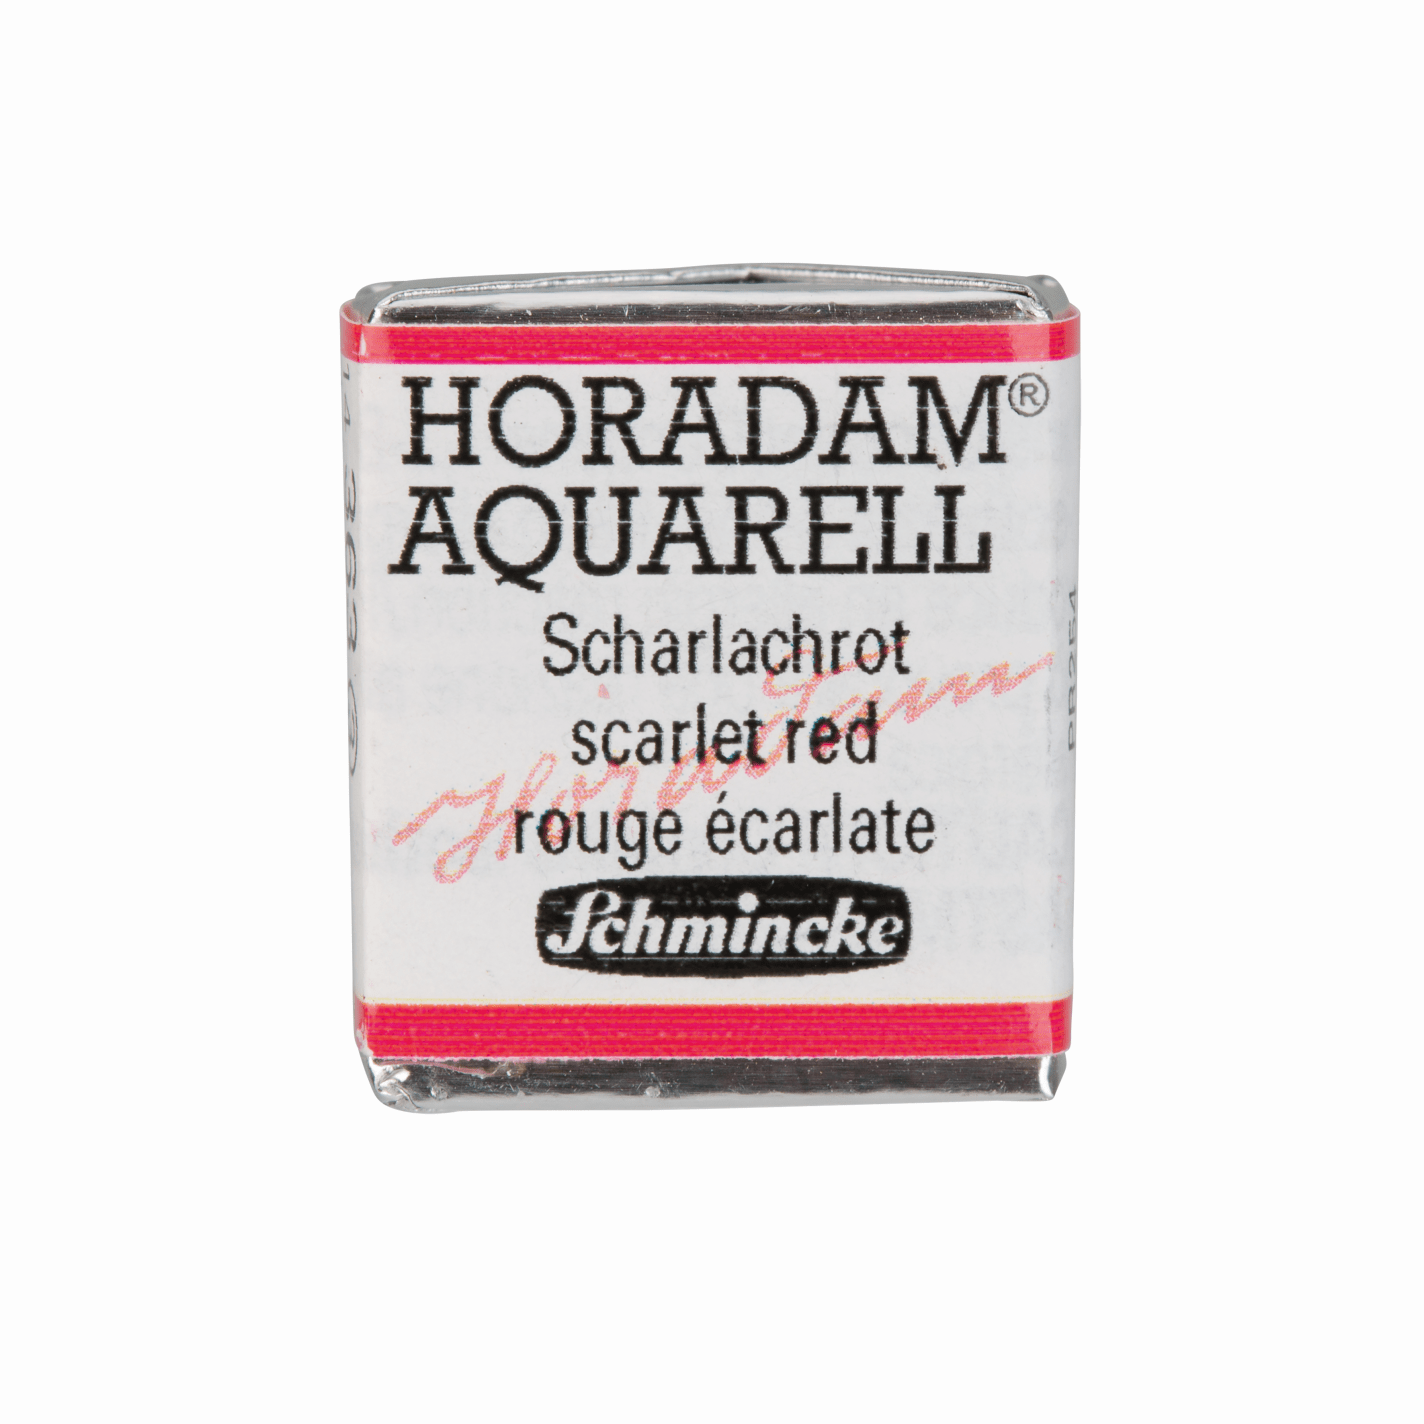 Schmincke Horadam Aquarell pans 1/2 pan Scarlet Red